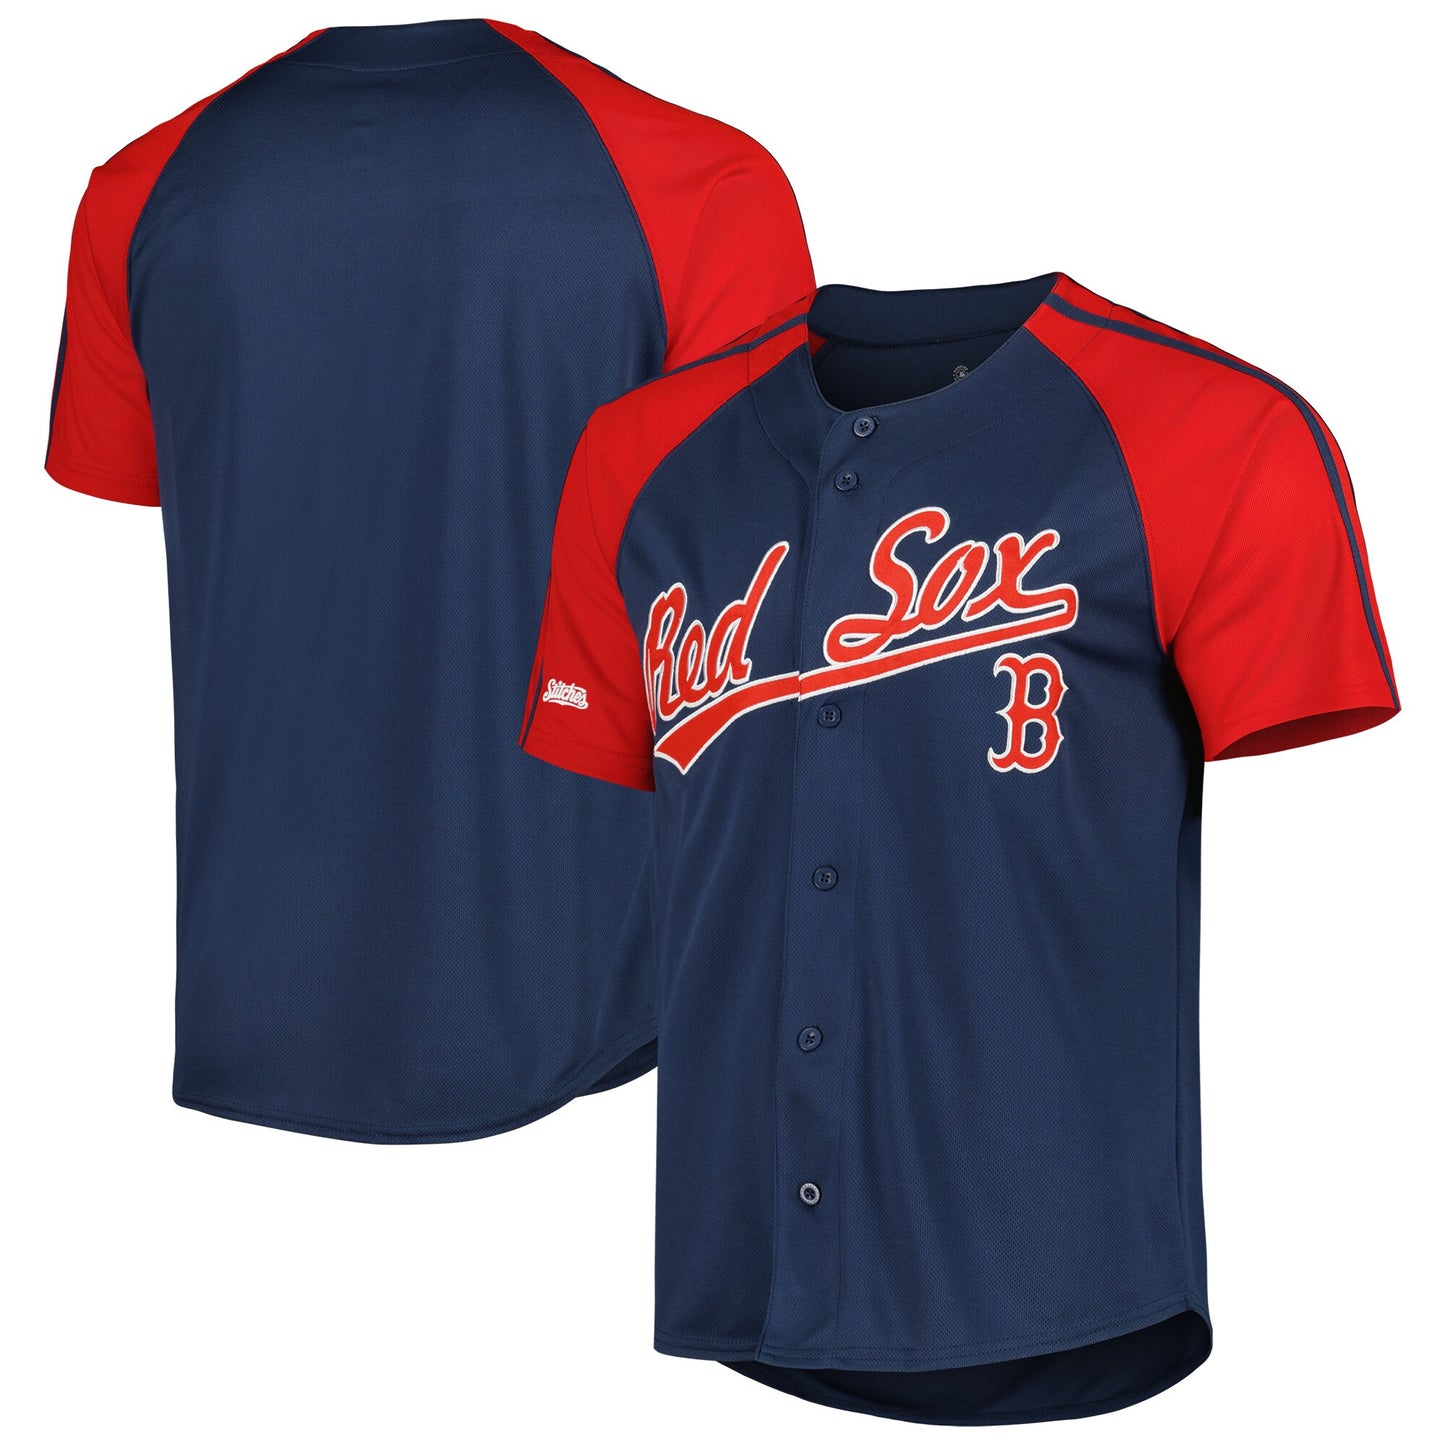 Boston Red Sox Stitches Button-Down Raglan Fashion Jersey - Navy